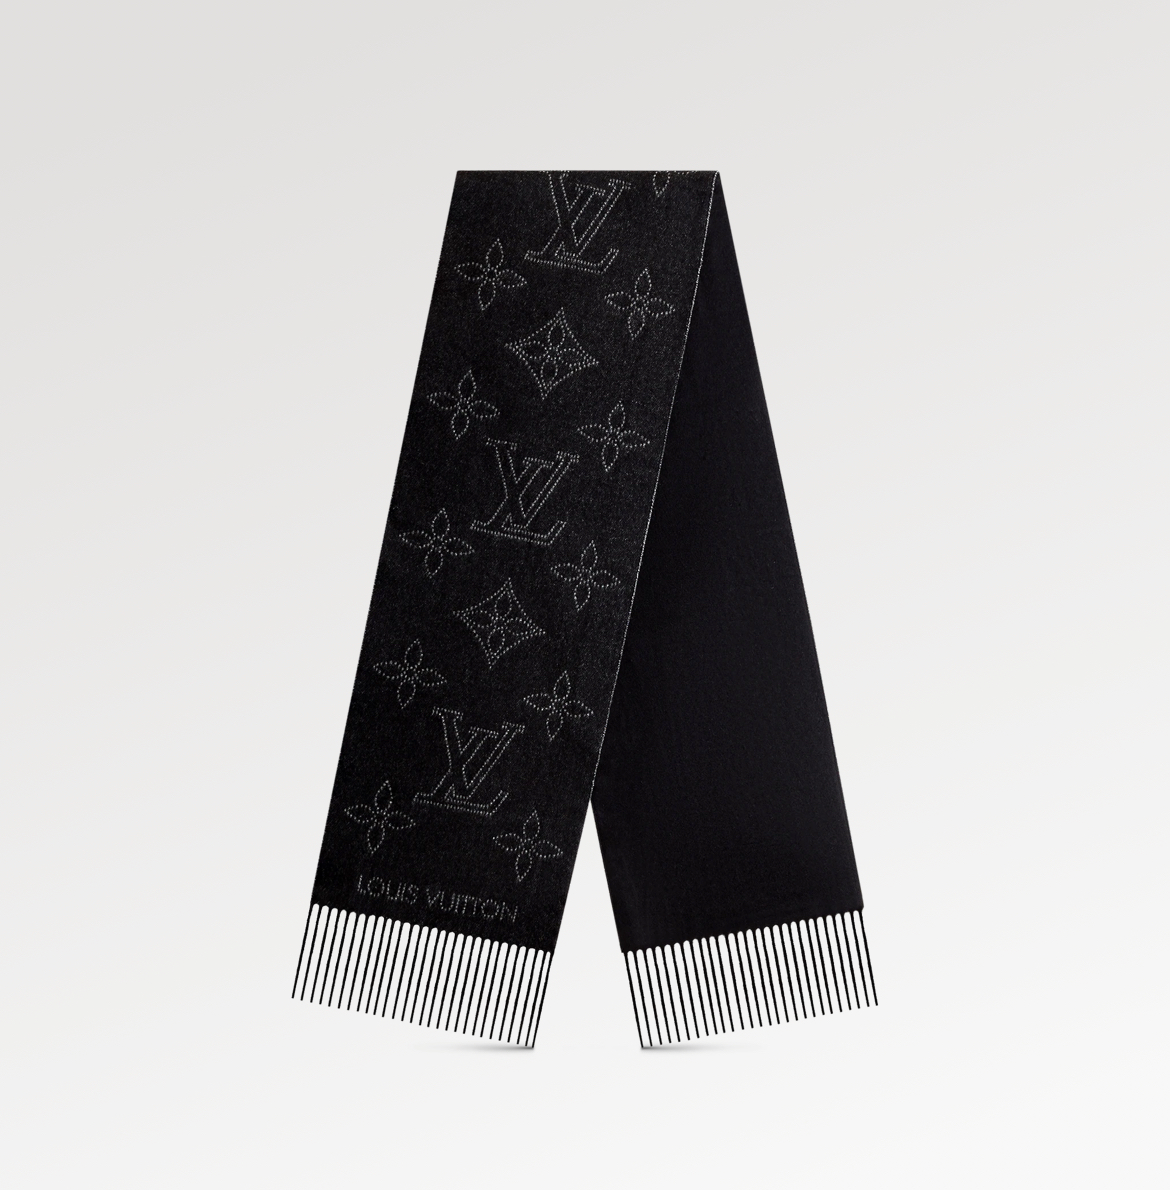 Louis Vuitton Mahina Flight Mode Scarf, Beige, One Size